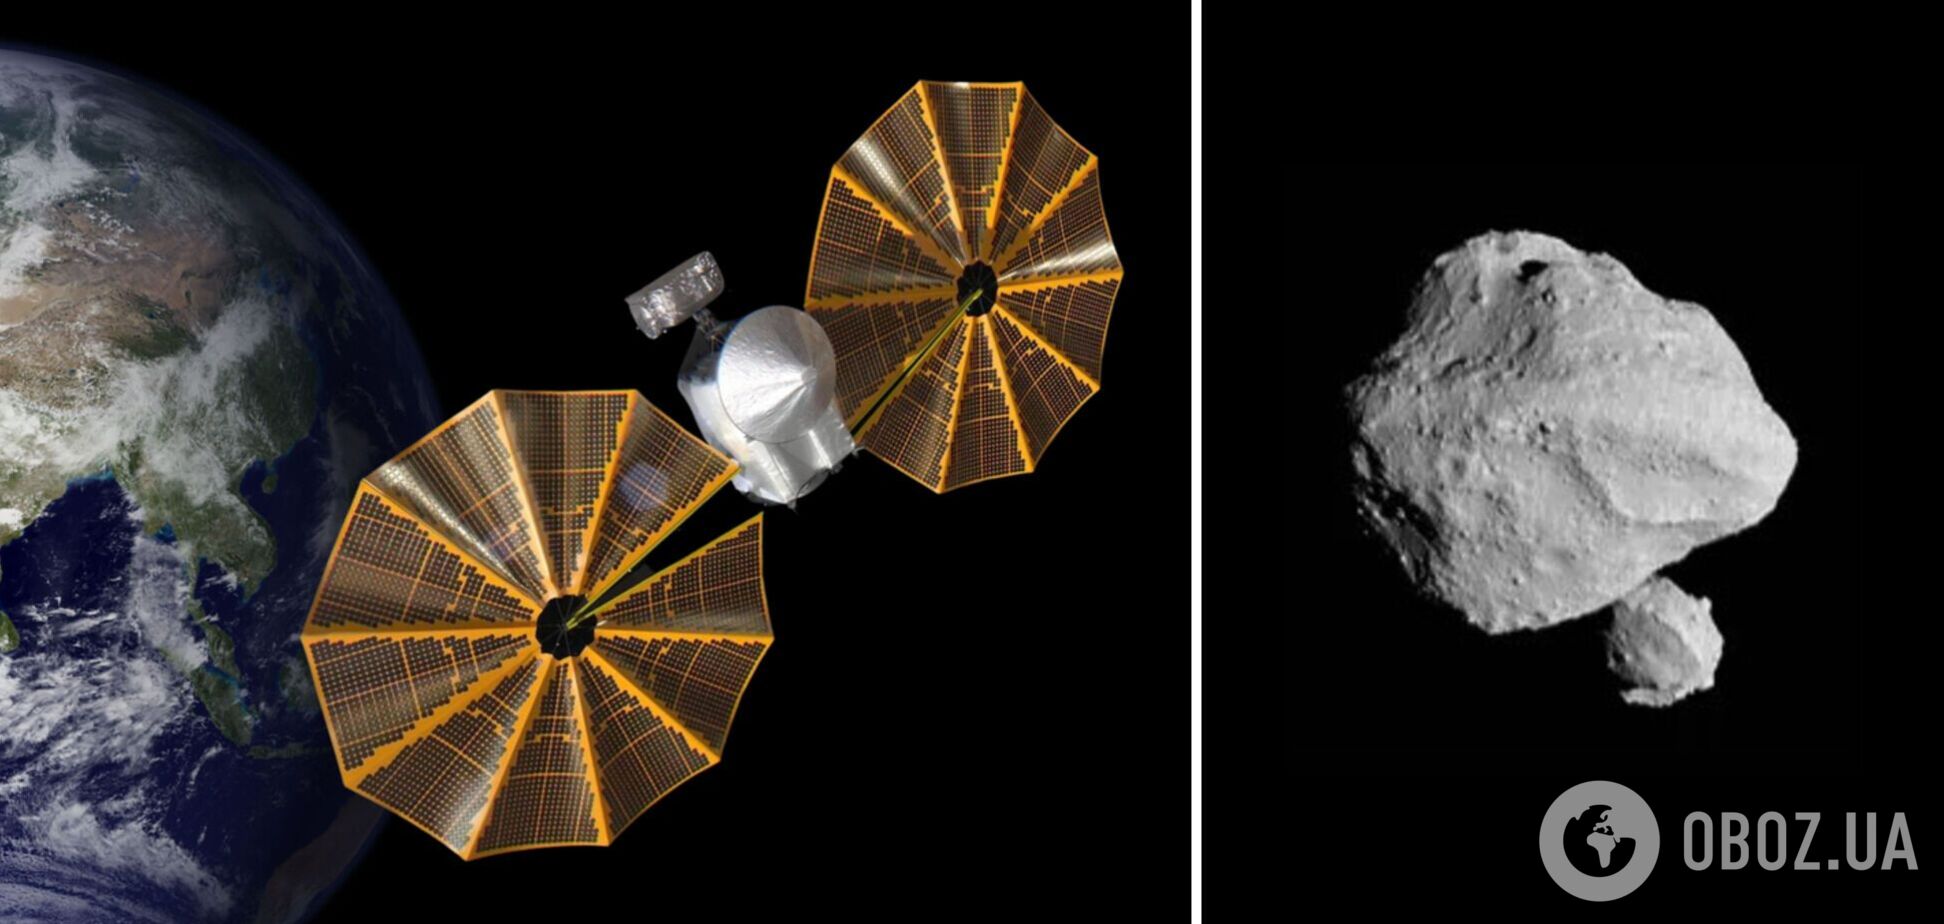 Аппарат NASA наткнулся на космический сюрприз на пути к троянским астероидам. Фото